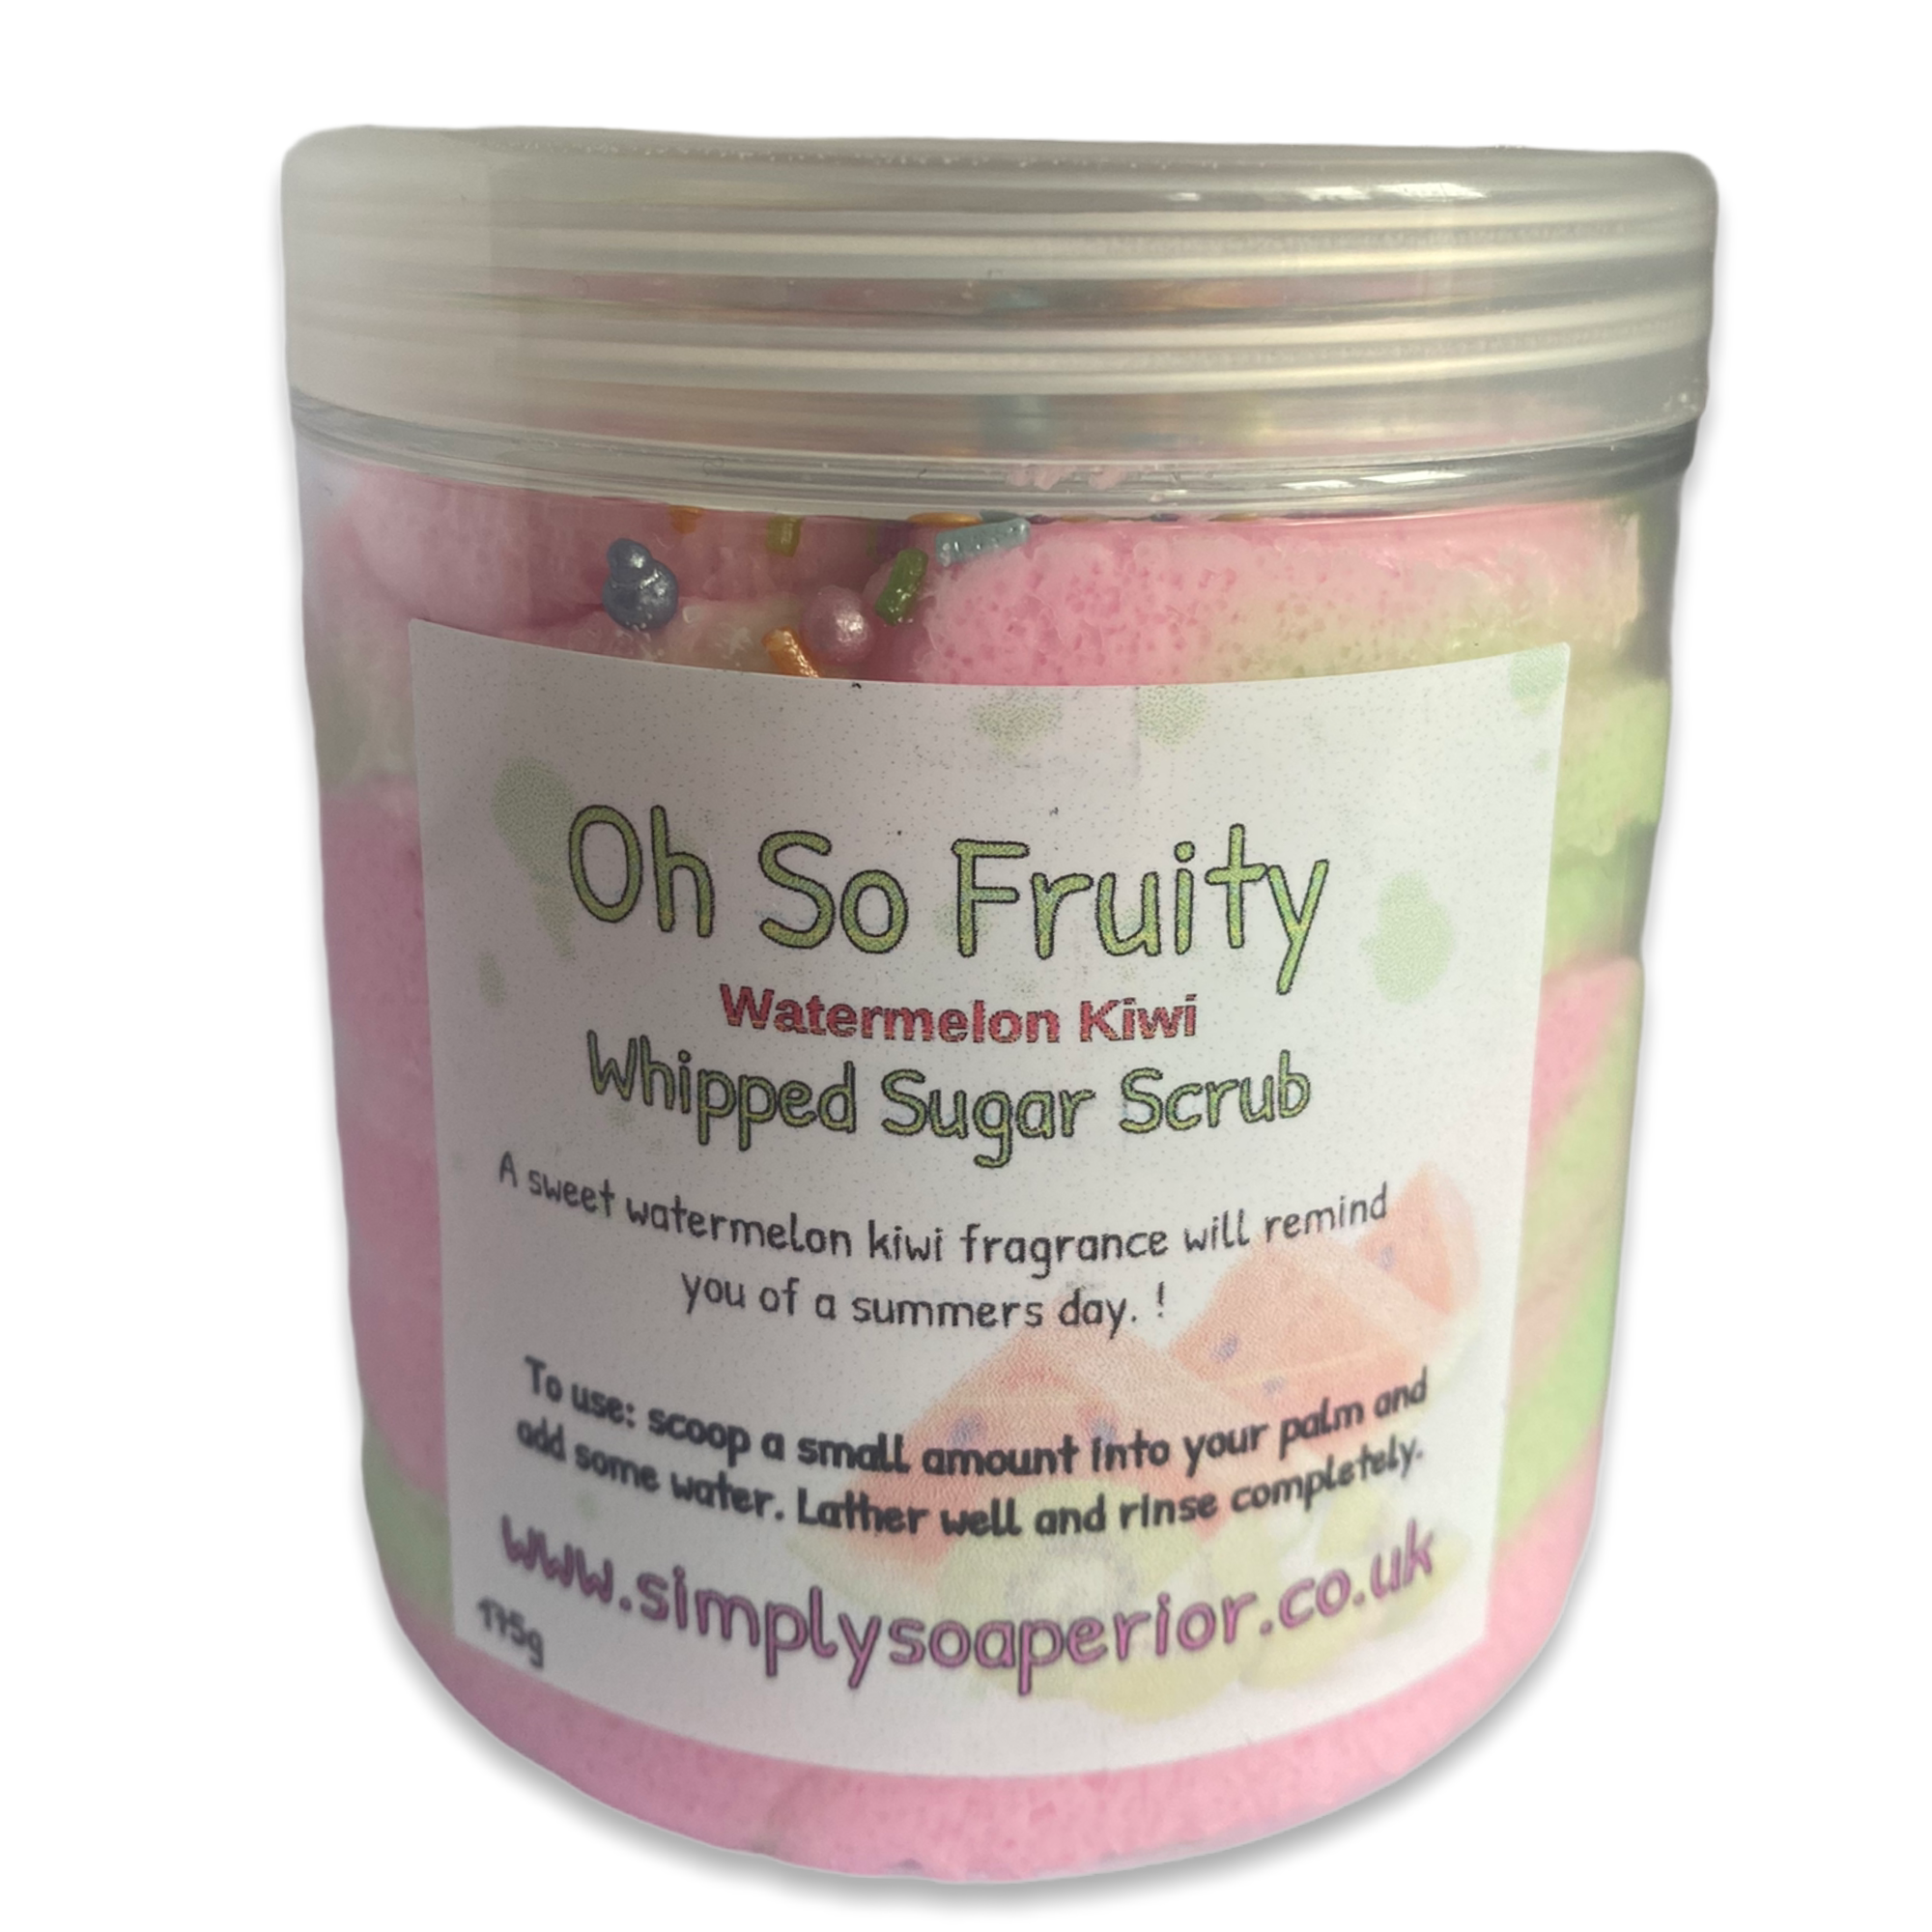 Oh So Fruity Whipped Sugar Scrub 3